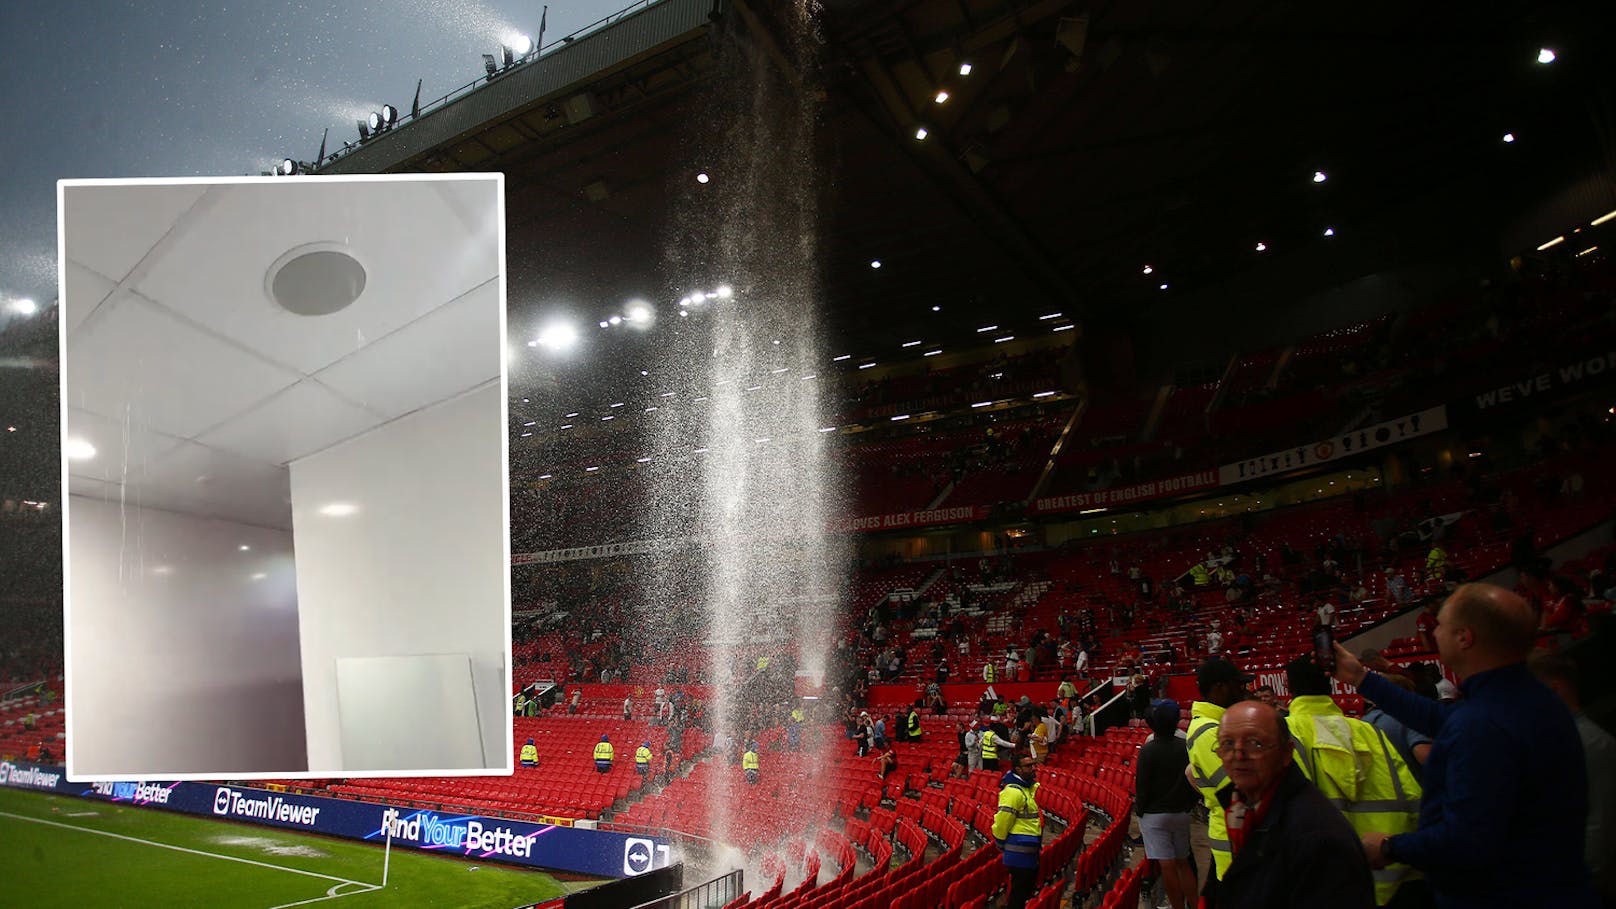 Kultstadion geflutet! United geht gegen Arsenal baden